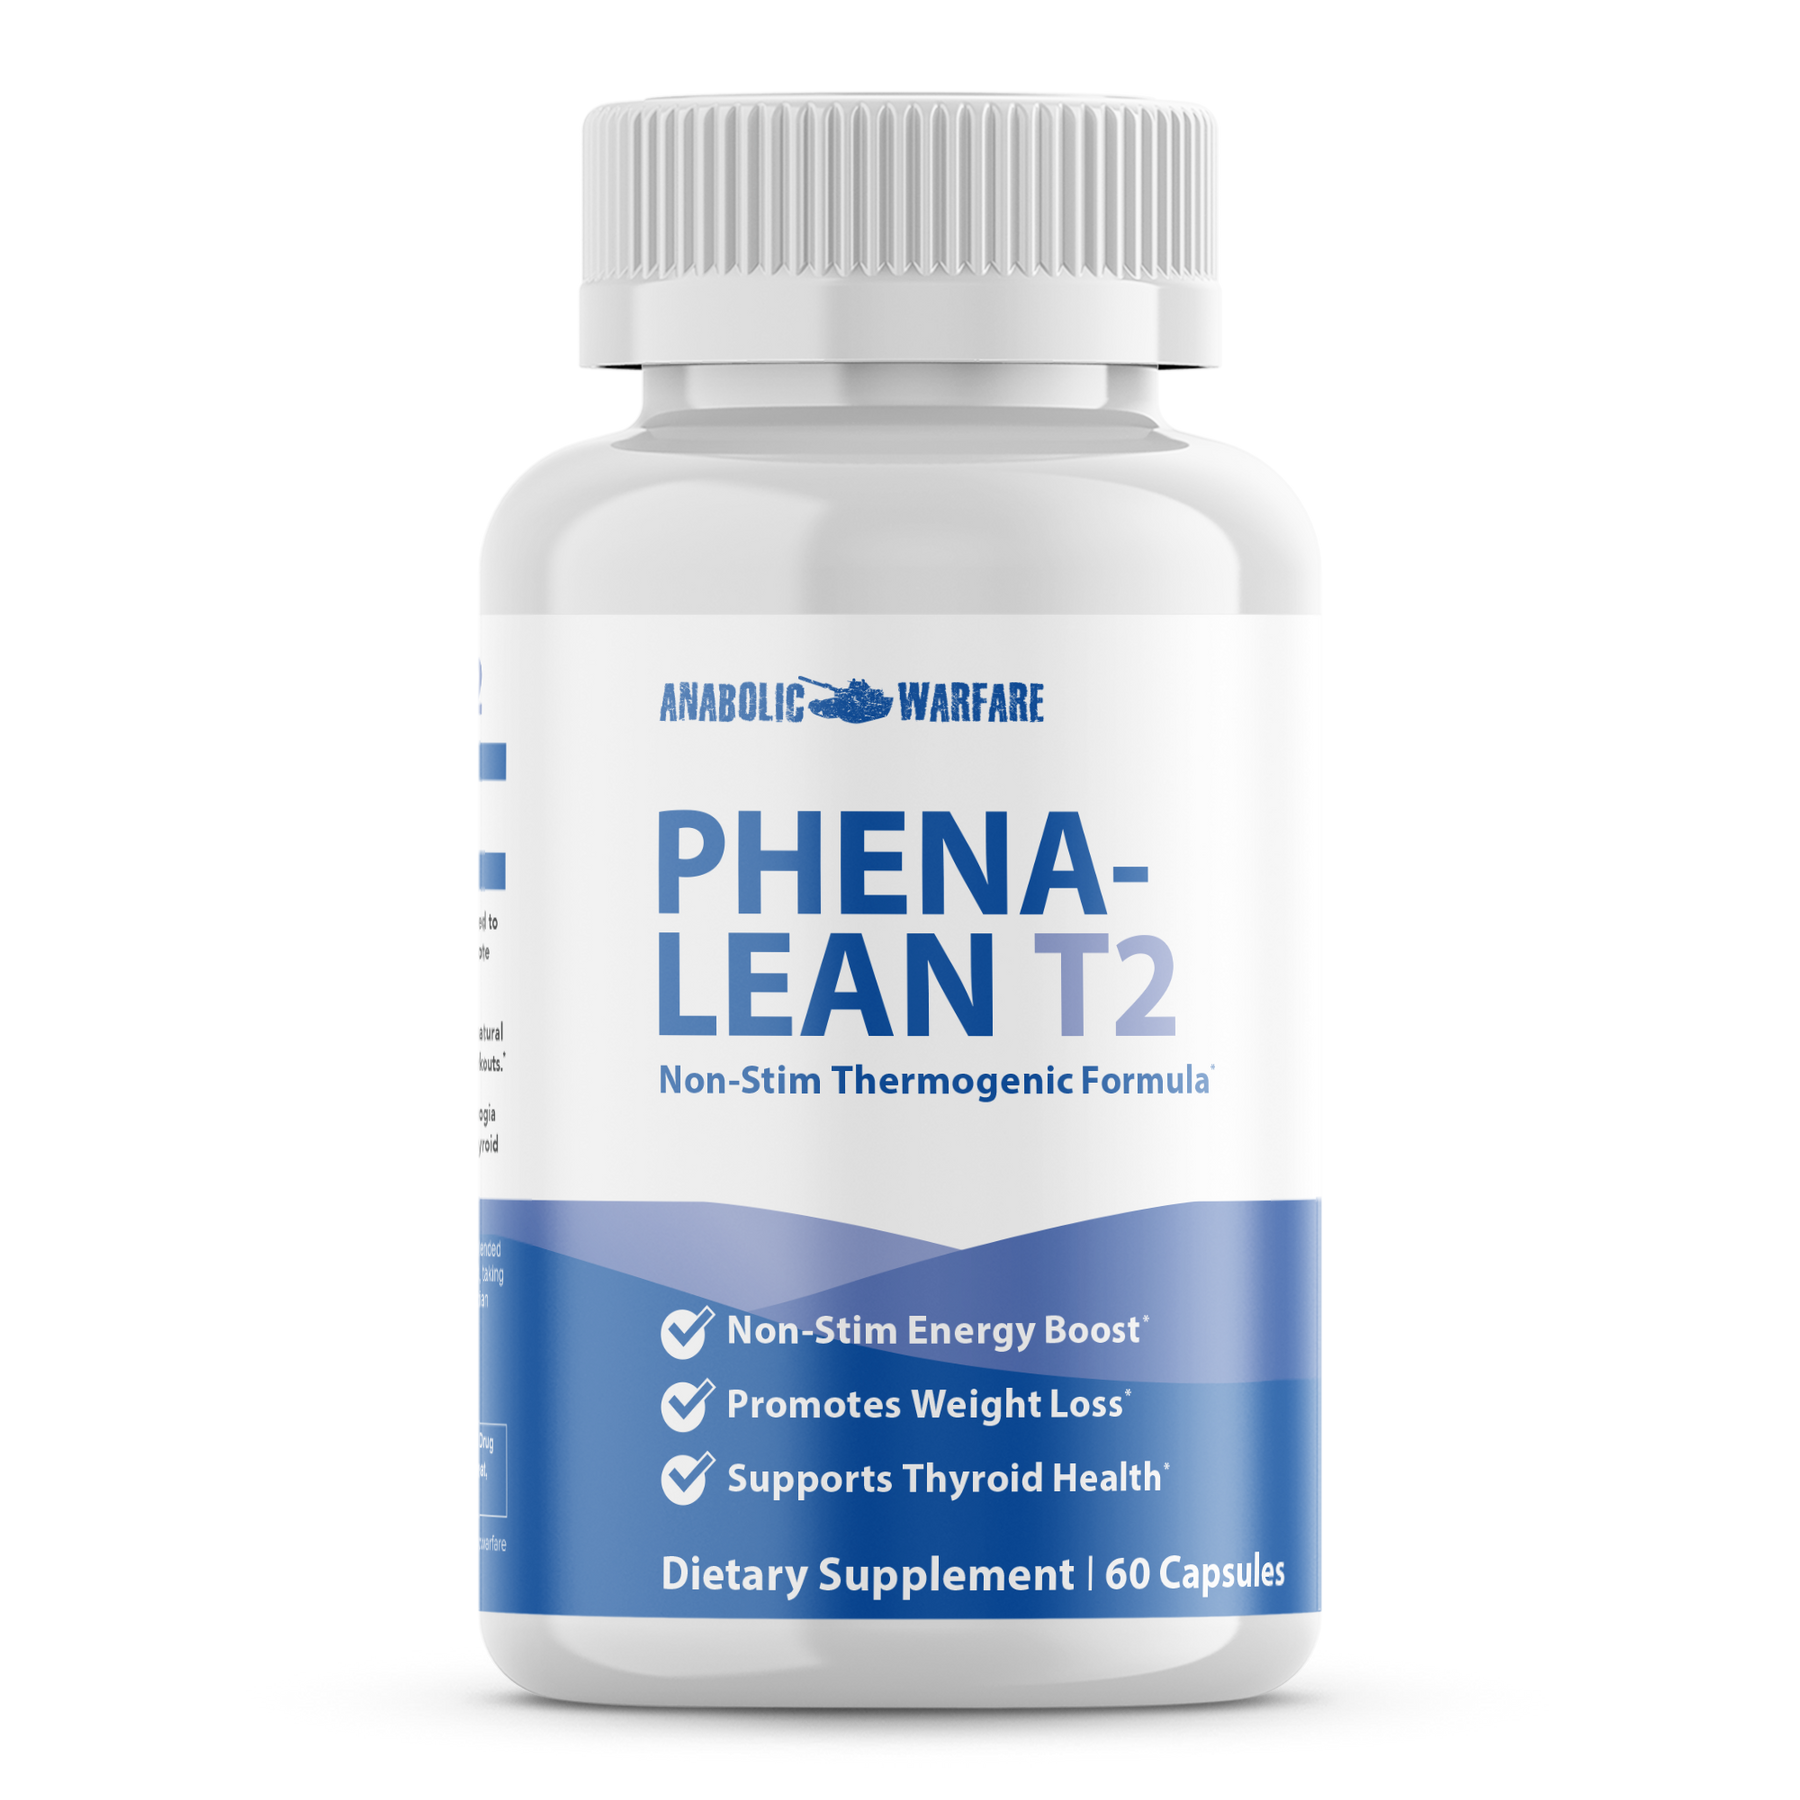 Phena-Lean T2 fat burner by anabolic warfare